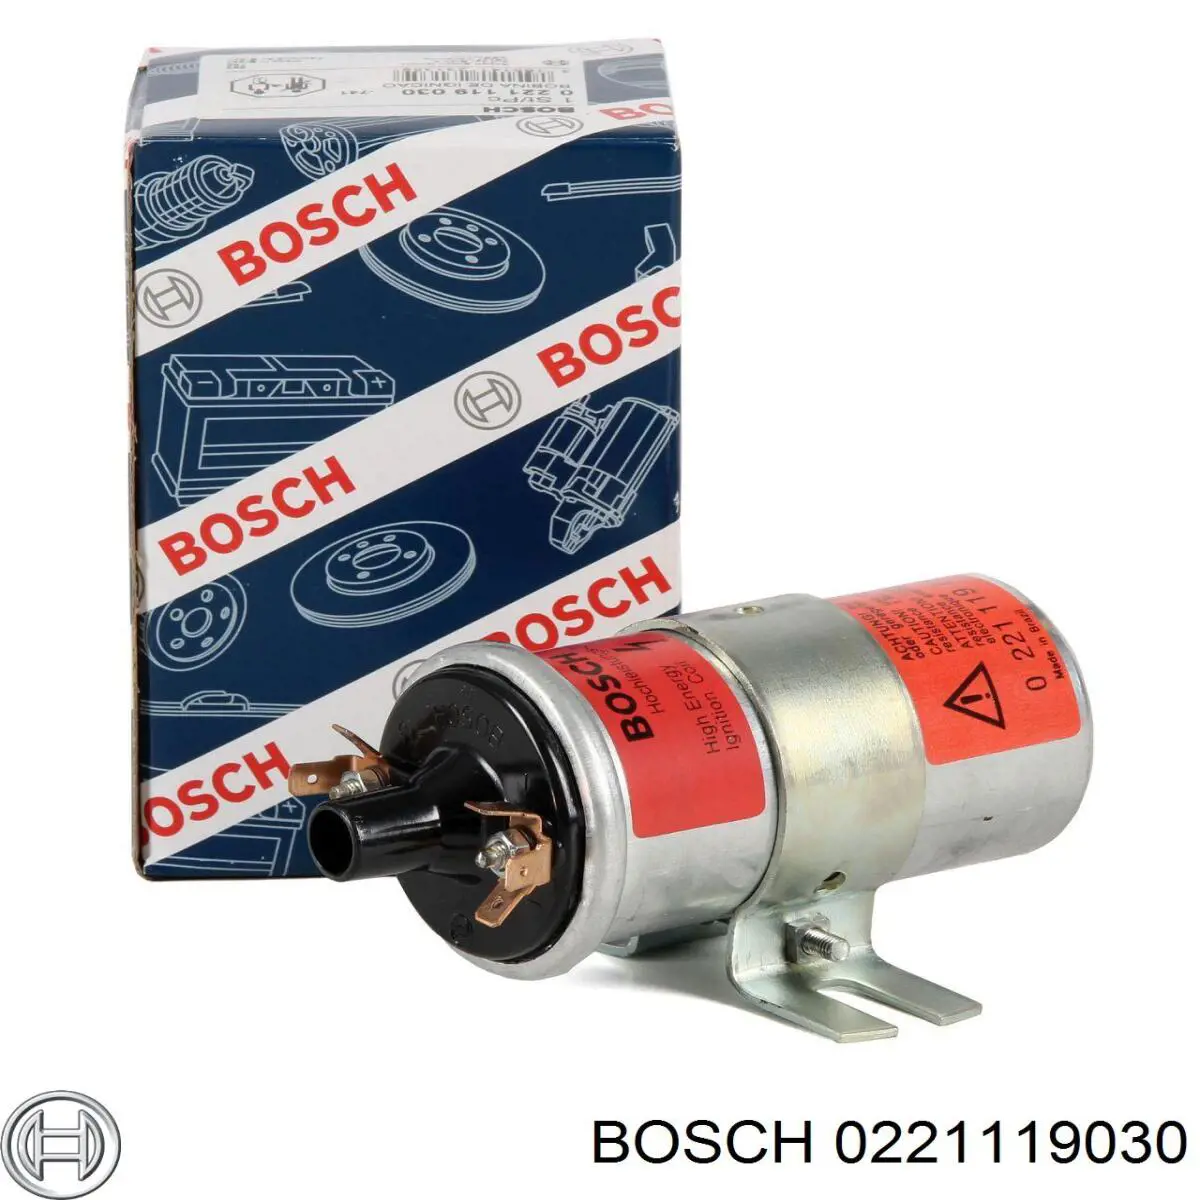 0221119030 Bosch bobina